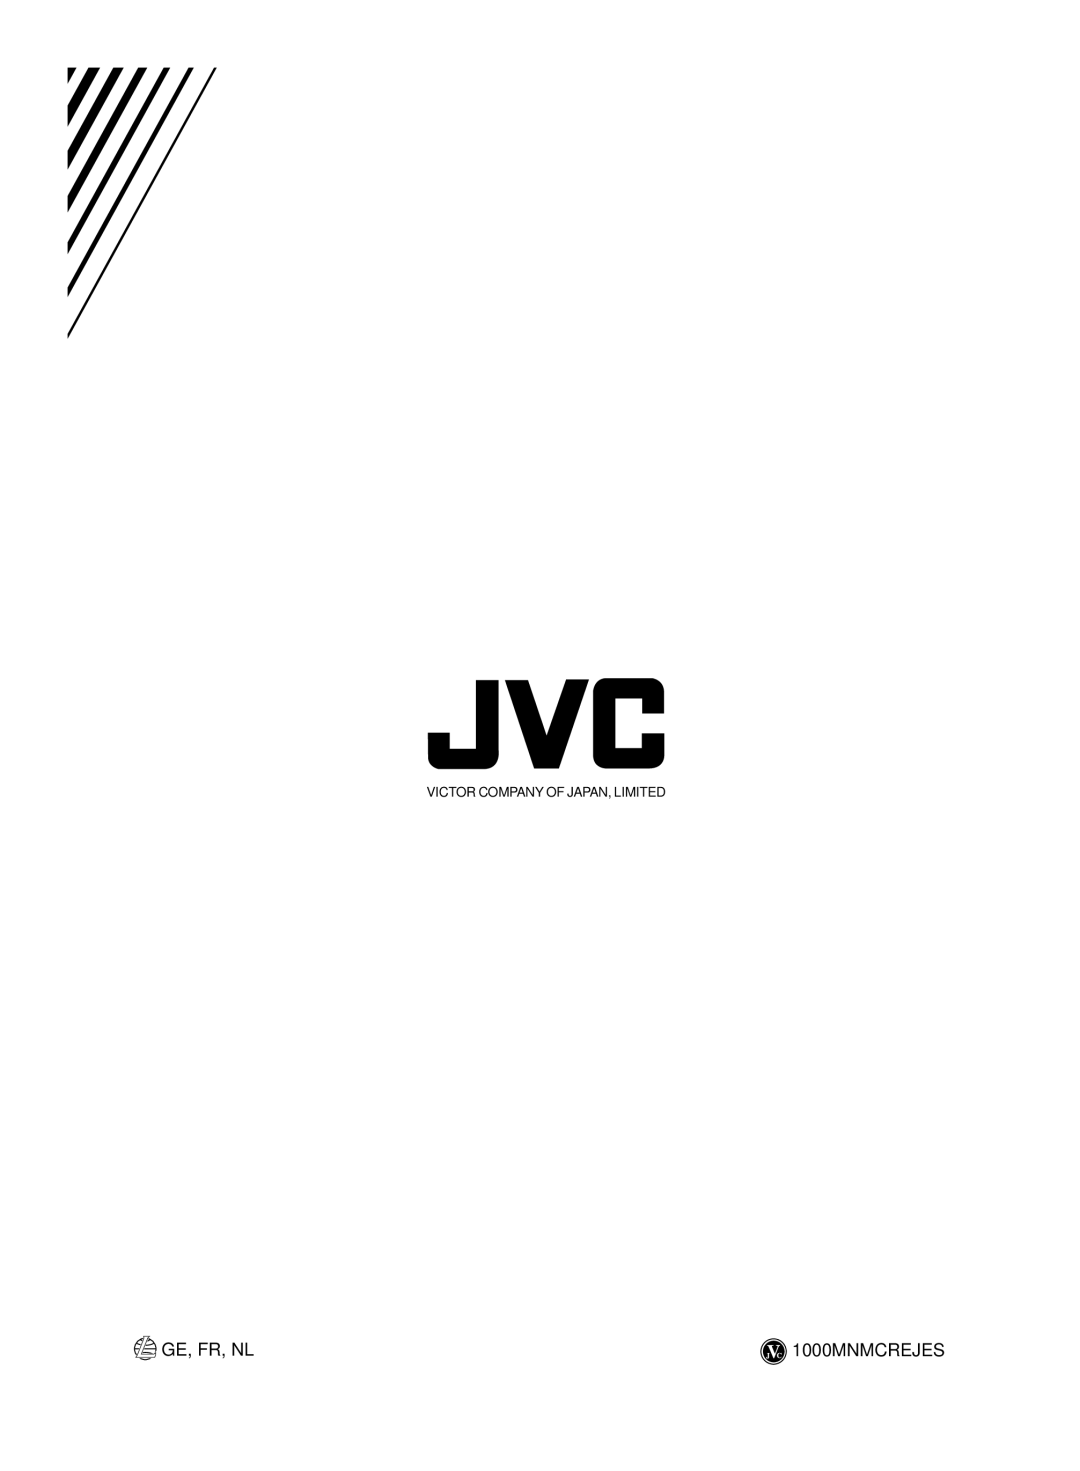 JVC XM-R700SL manual Ge, Fr, Nl, 1000MNMCREJES, Victor Company Of Japan, Limited 